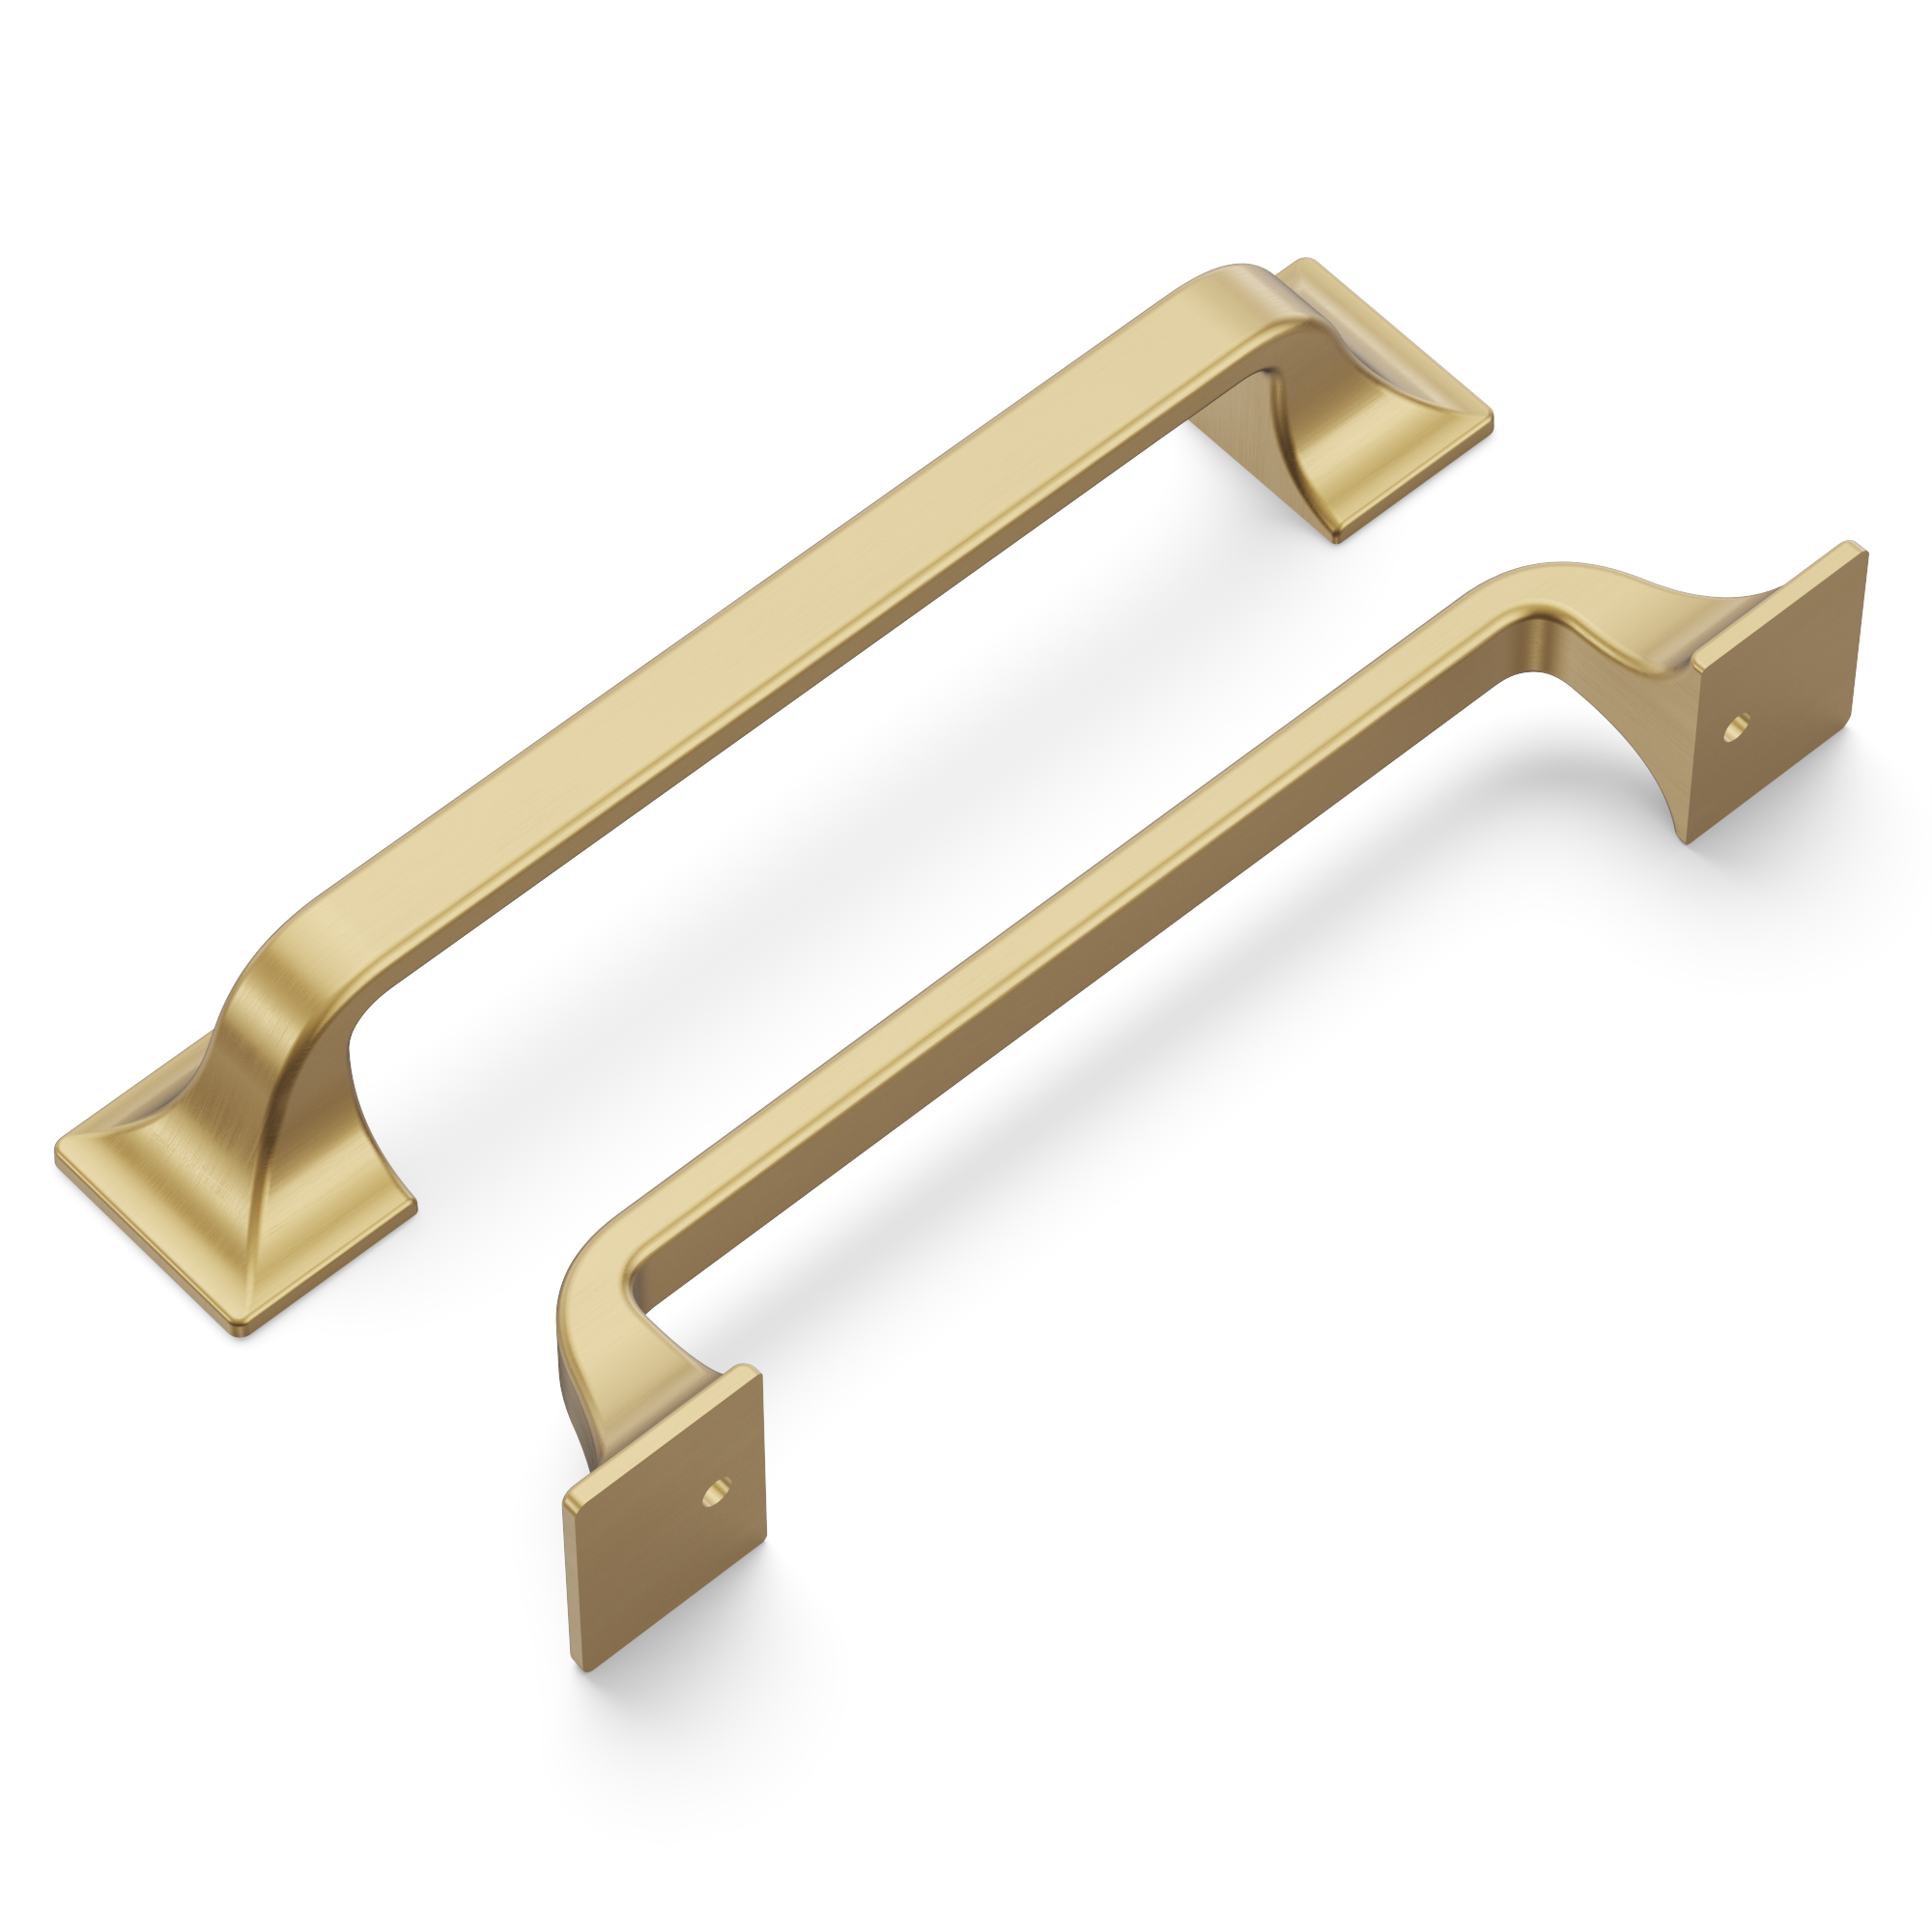 Satin Bronze Finish - Gibson Series Decorative Hardware Suite - Elements  Builder's Hardware  Decorative Hardware, Cabinet, Door, Shutter, Window  Hardware, Bath & Architectural Accessories